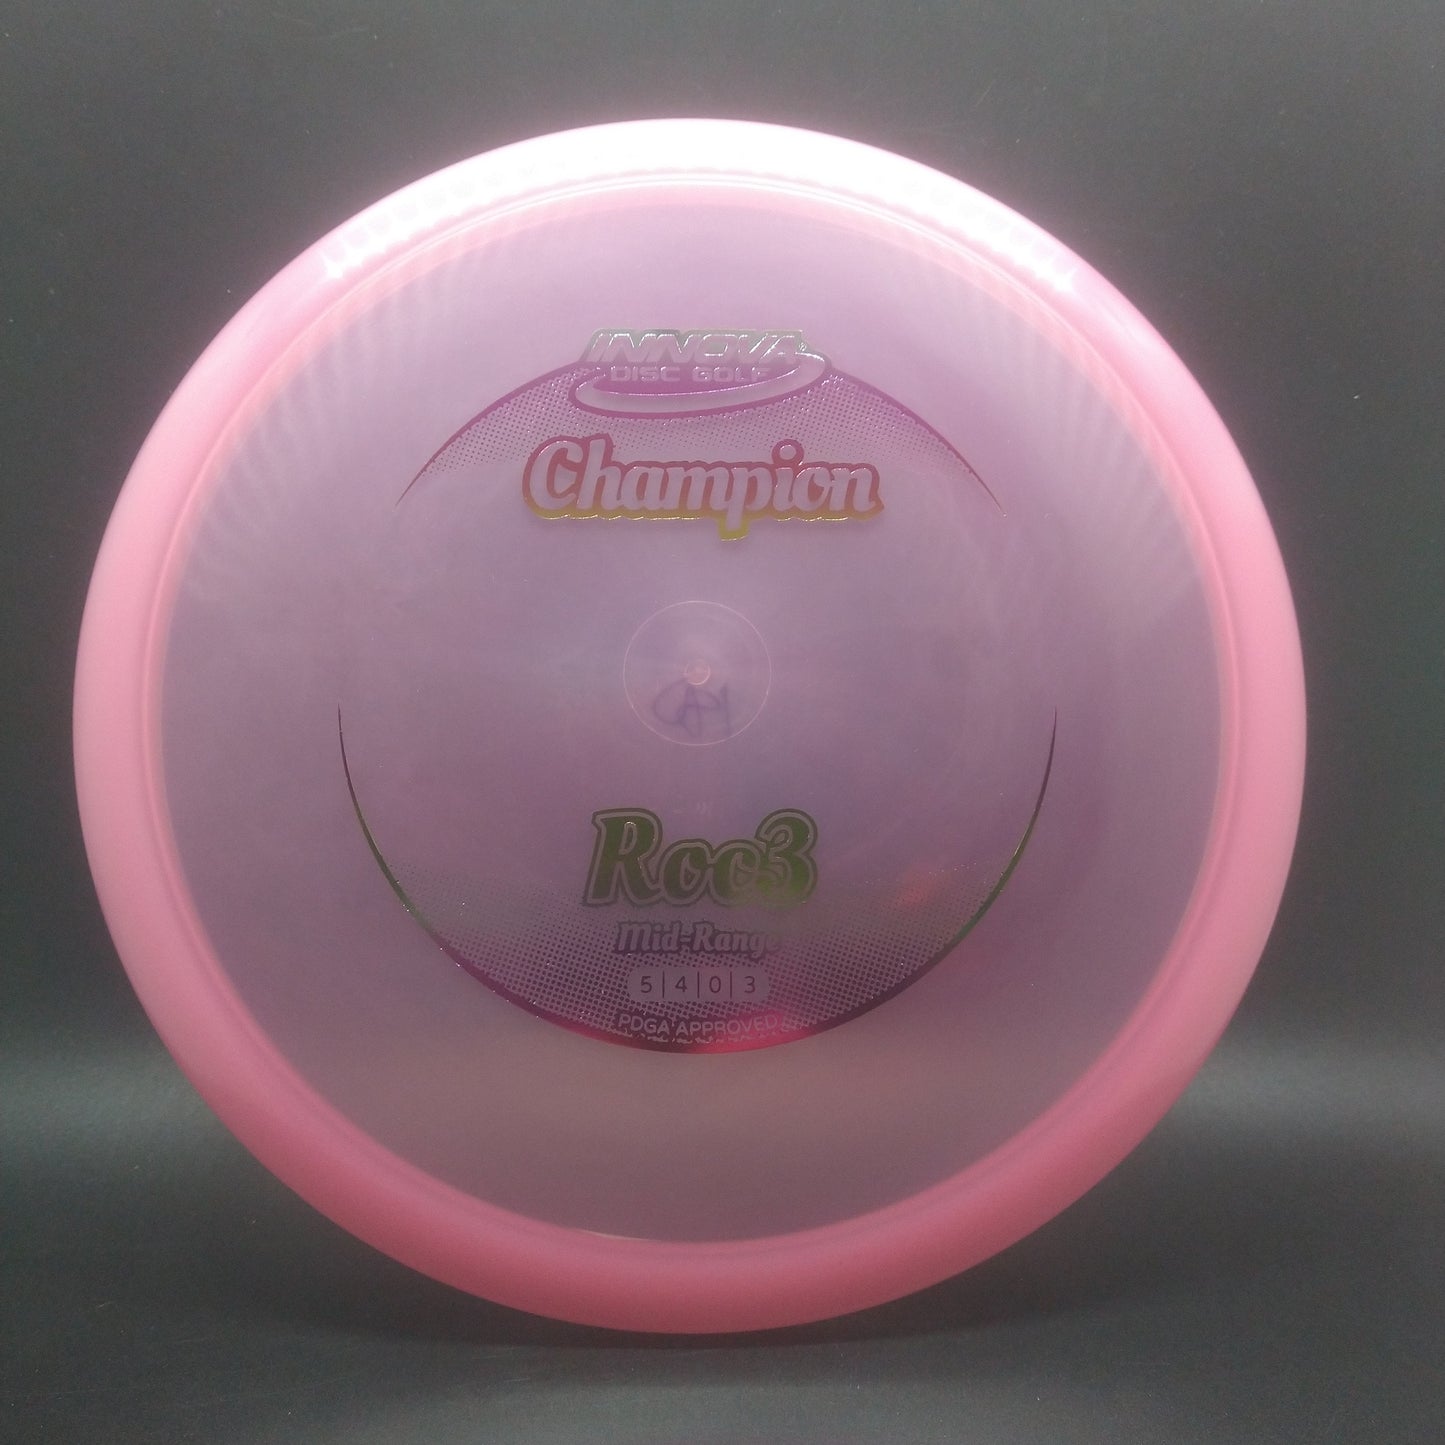 Innova champion Roc3 Pink 180g